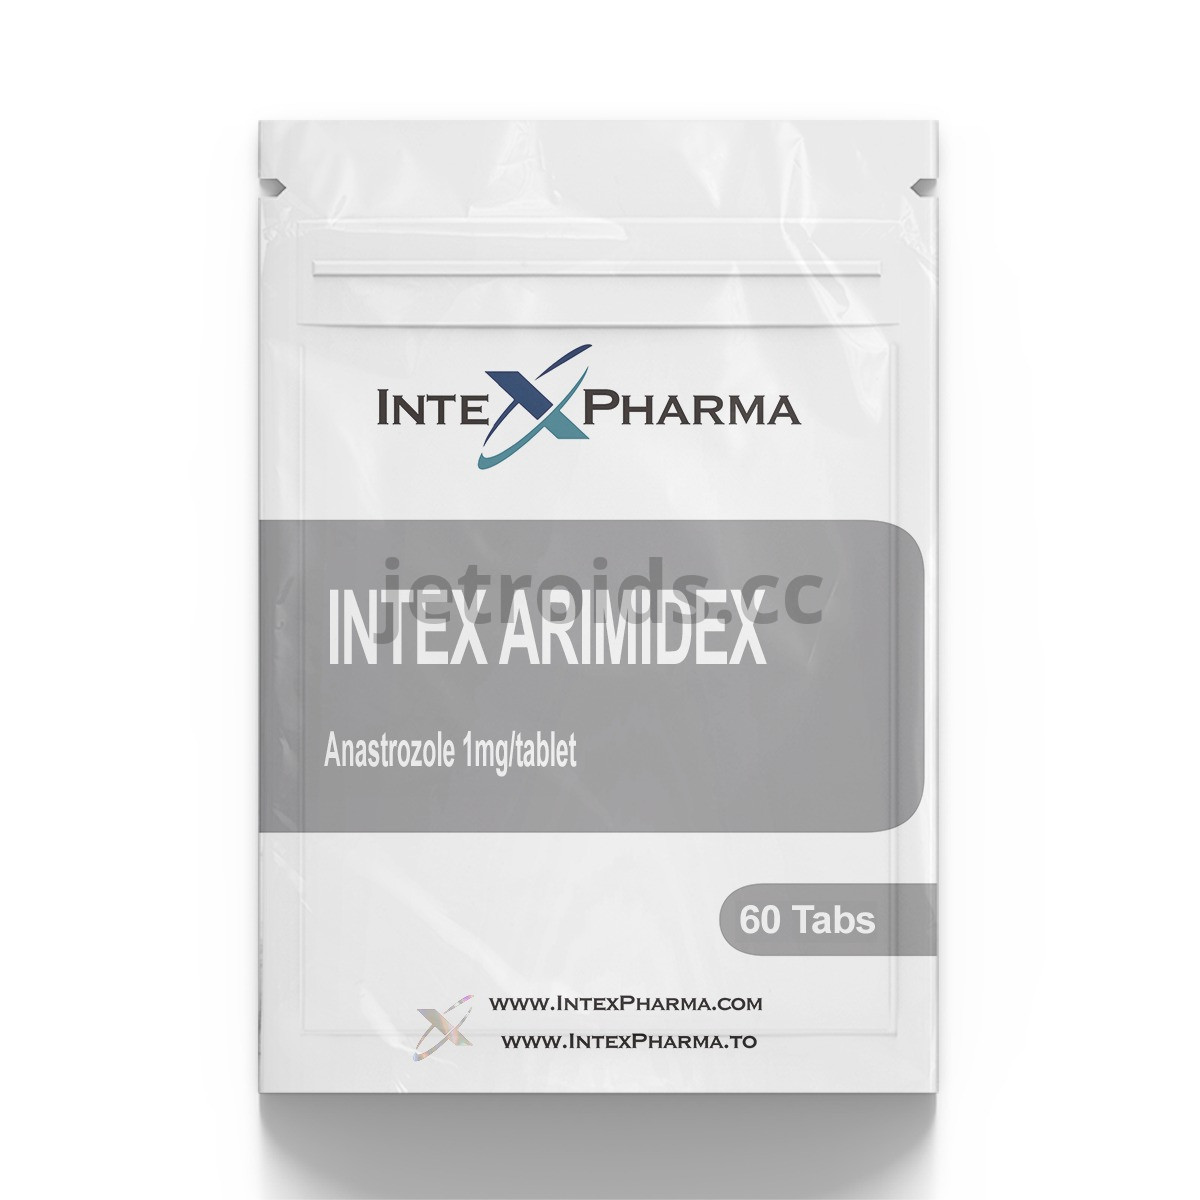 IntexPharma Intex Arimidex Product Info